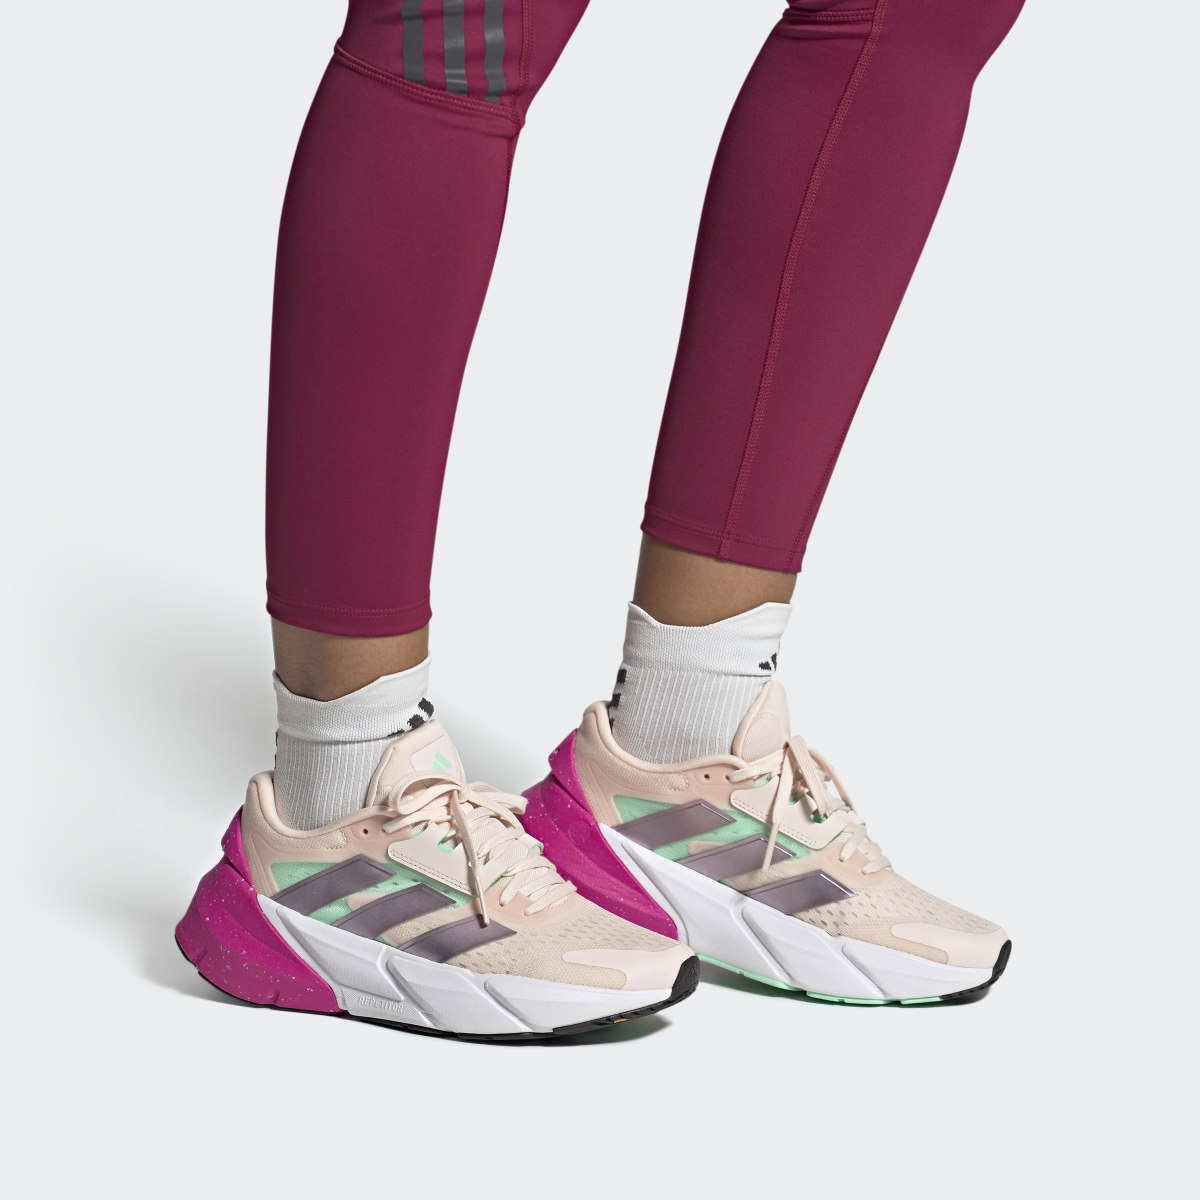 Adidas Scarpe adistar 2.0. 5